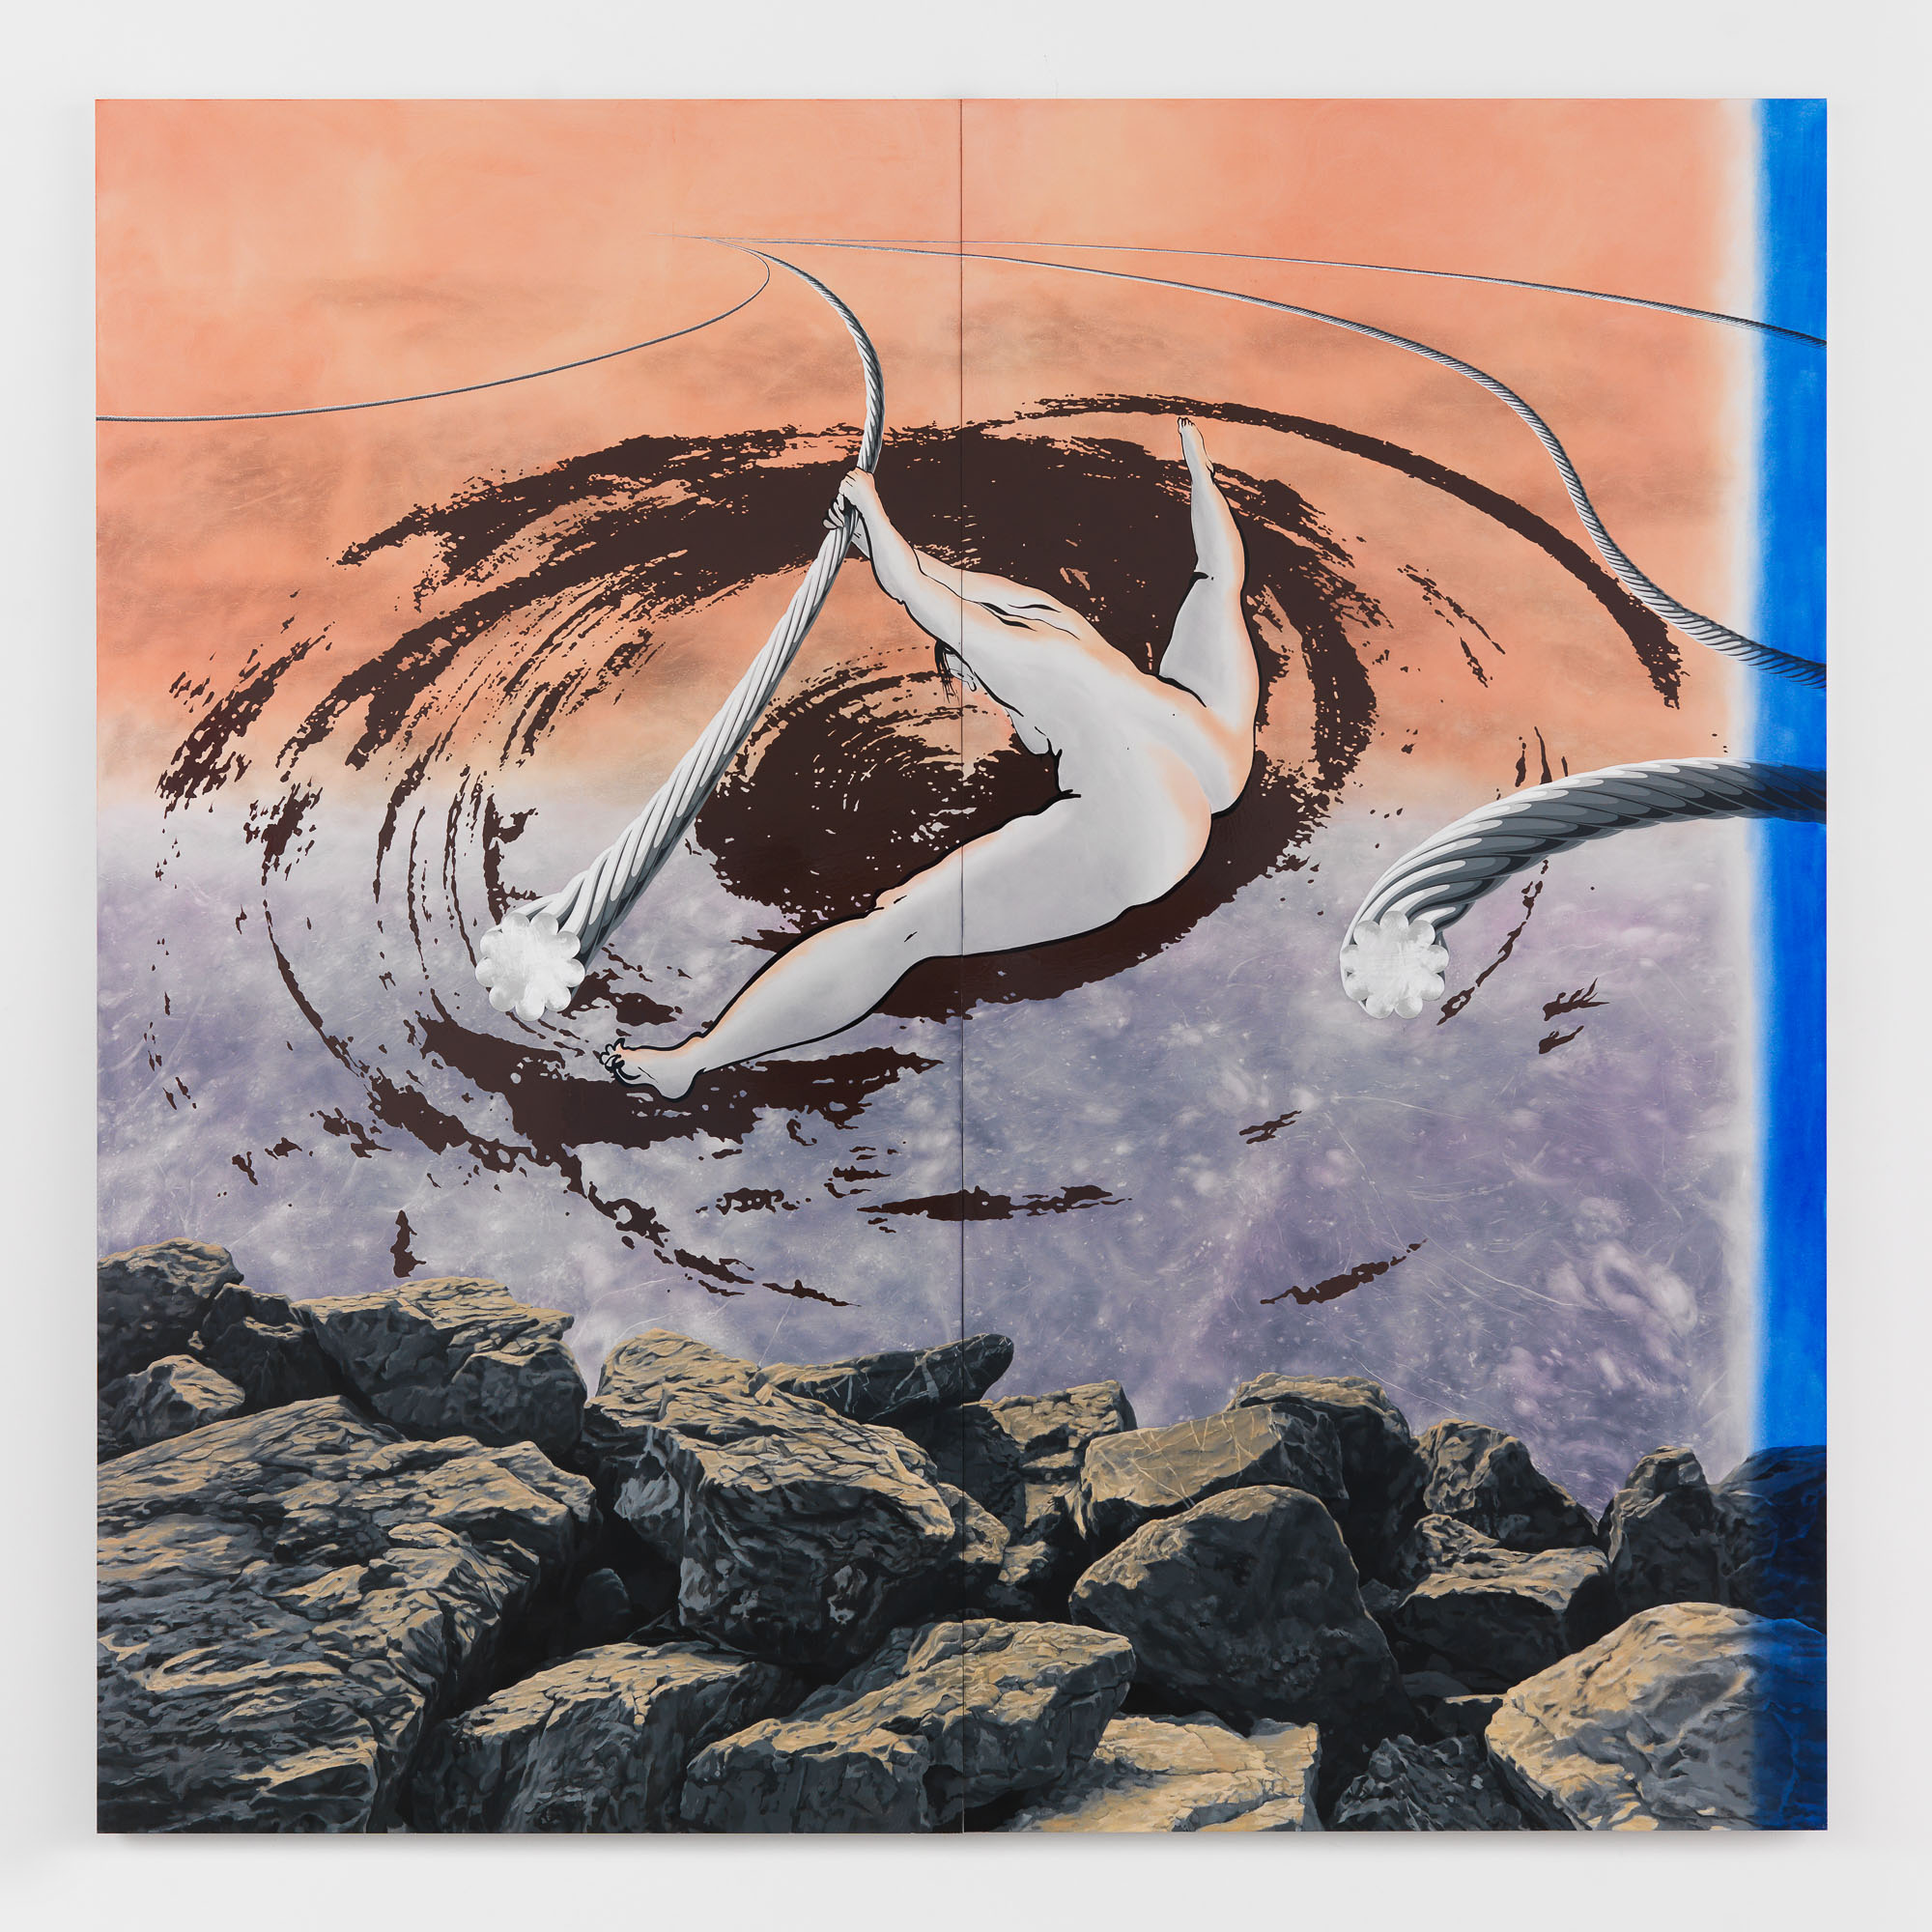 Ebecho Muslimova, Fatebe Sunrise On Ice, 2022, Enamel and oil paint on Dibond aluminum, 96 x 96 in.